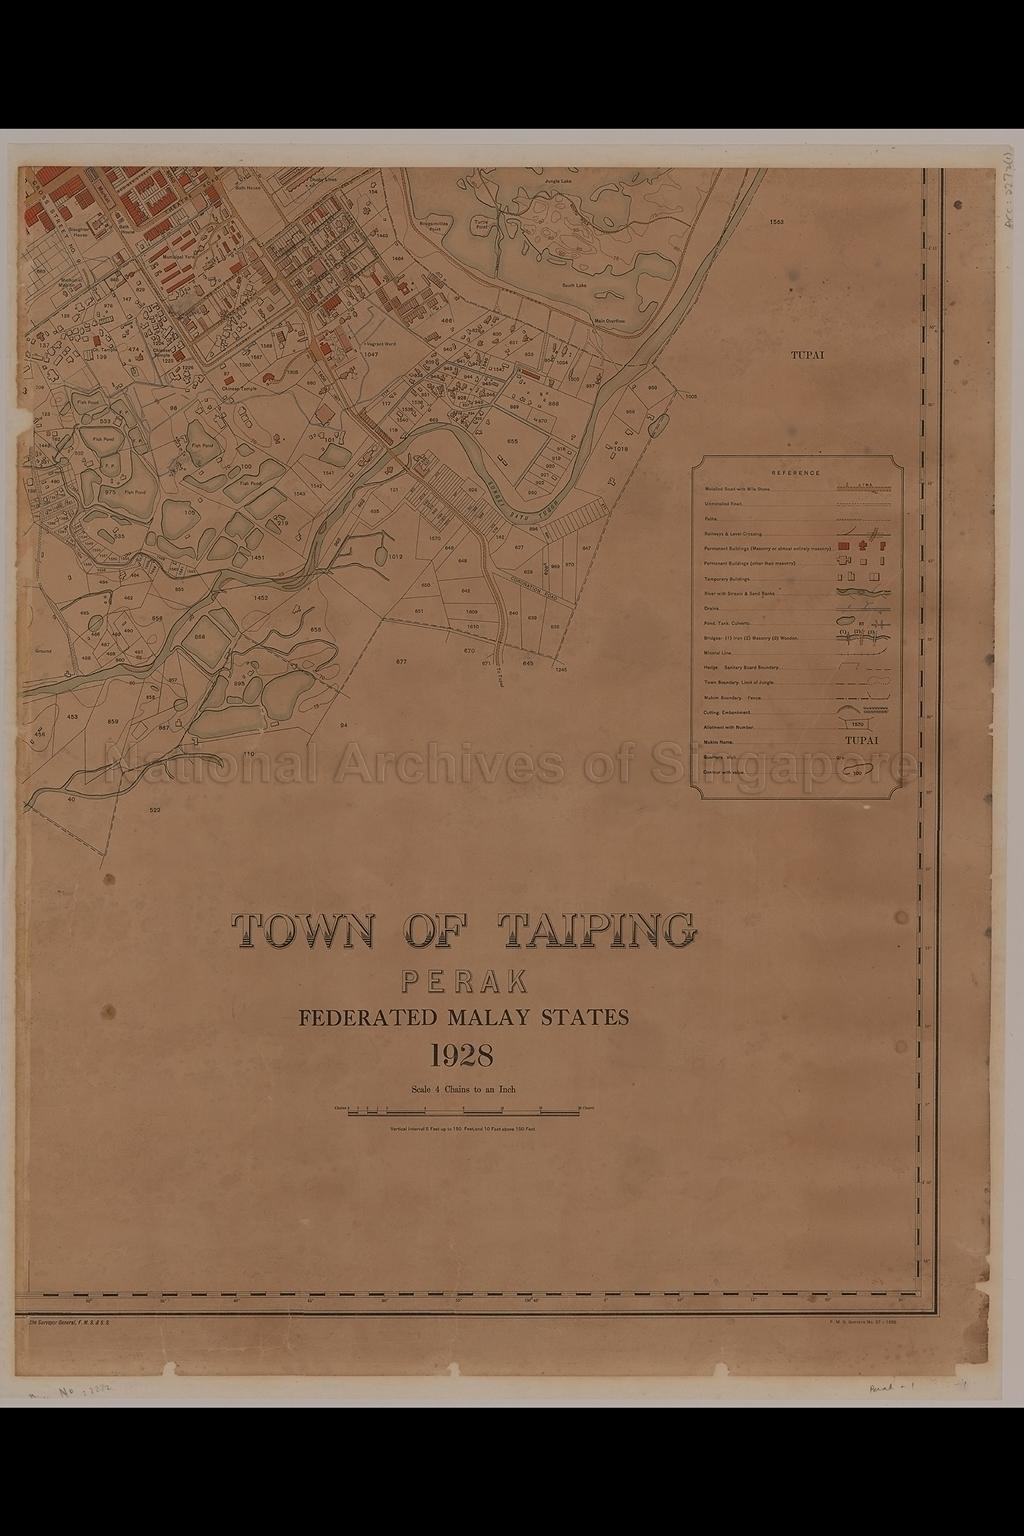 Town of Taiping, Perak, Federated Malay States,1928